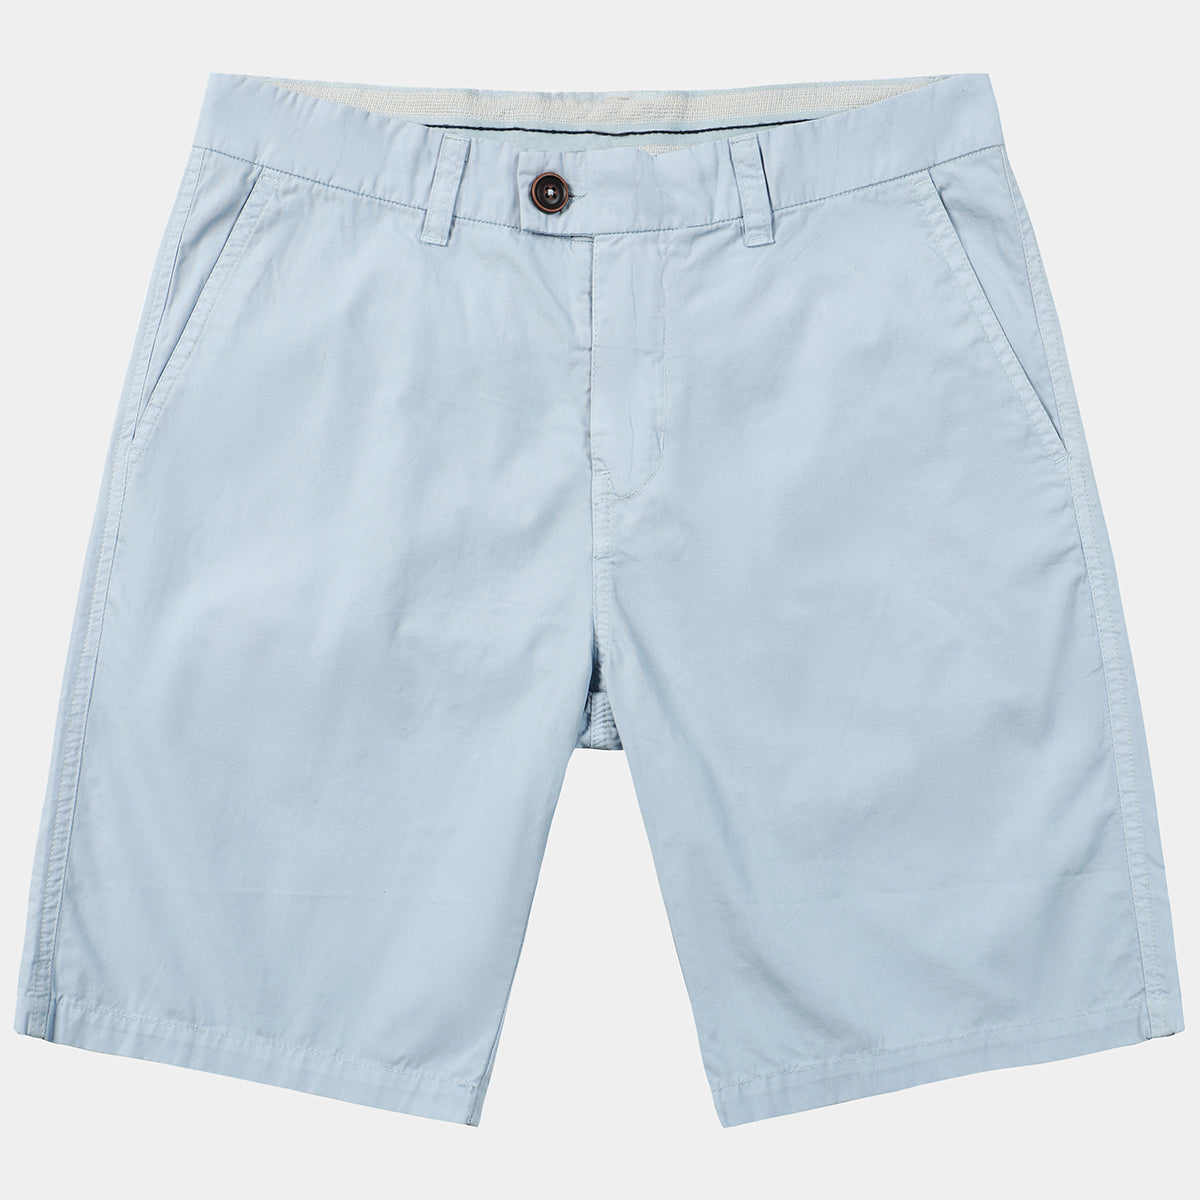 Men's Light Blue Summer Casual Breathable Beach Cotton Shorts